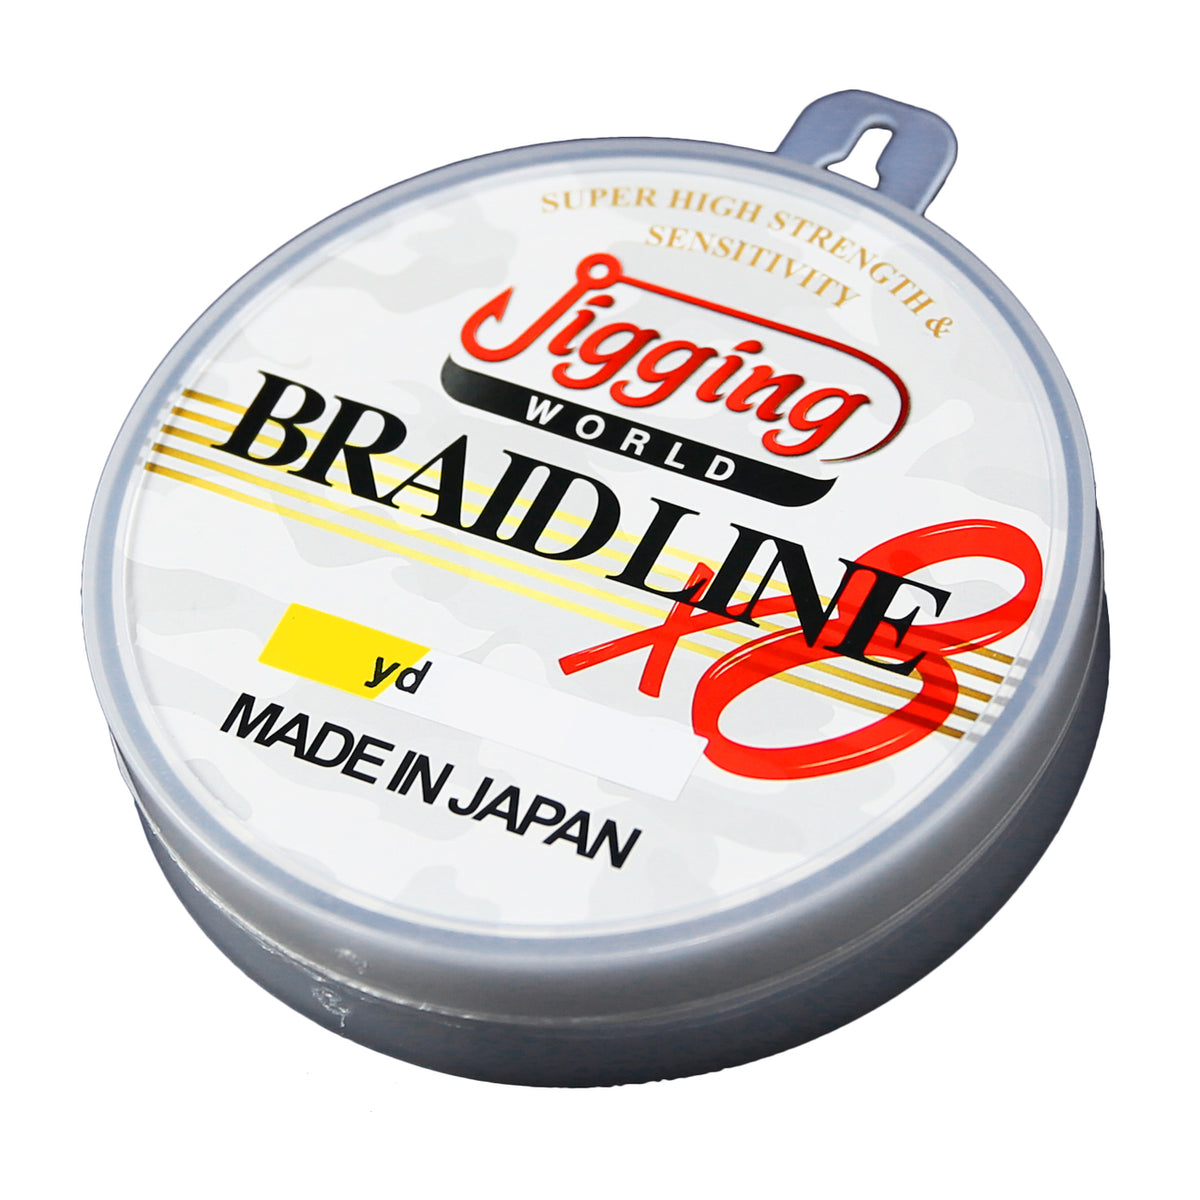 Jigging World X8 Braided Line Multicolor – Tackle World